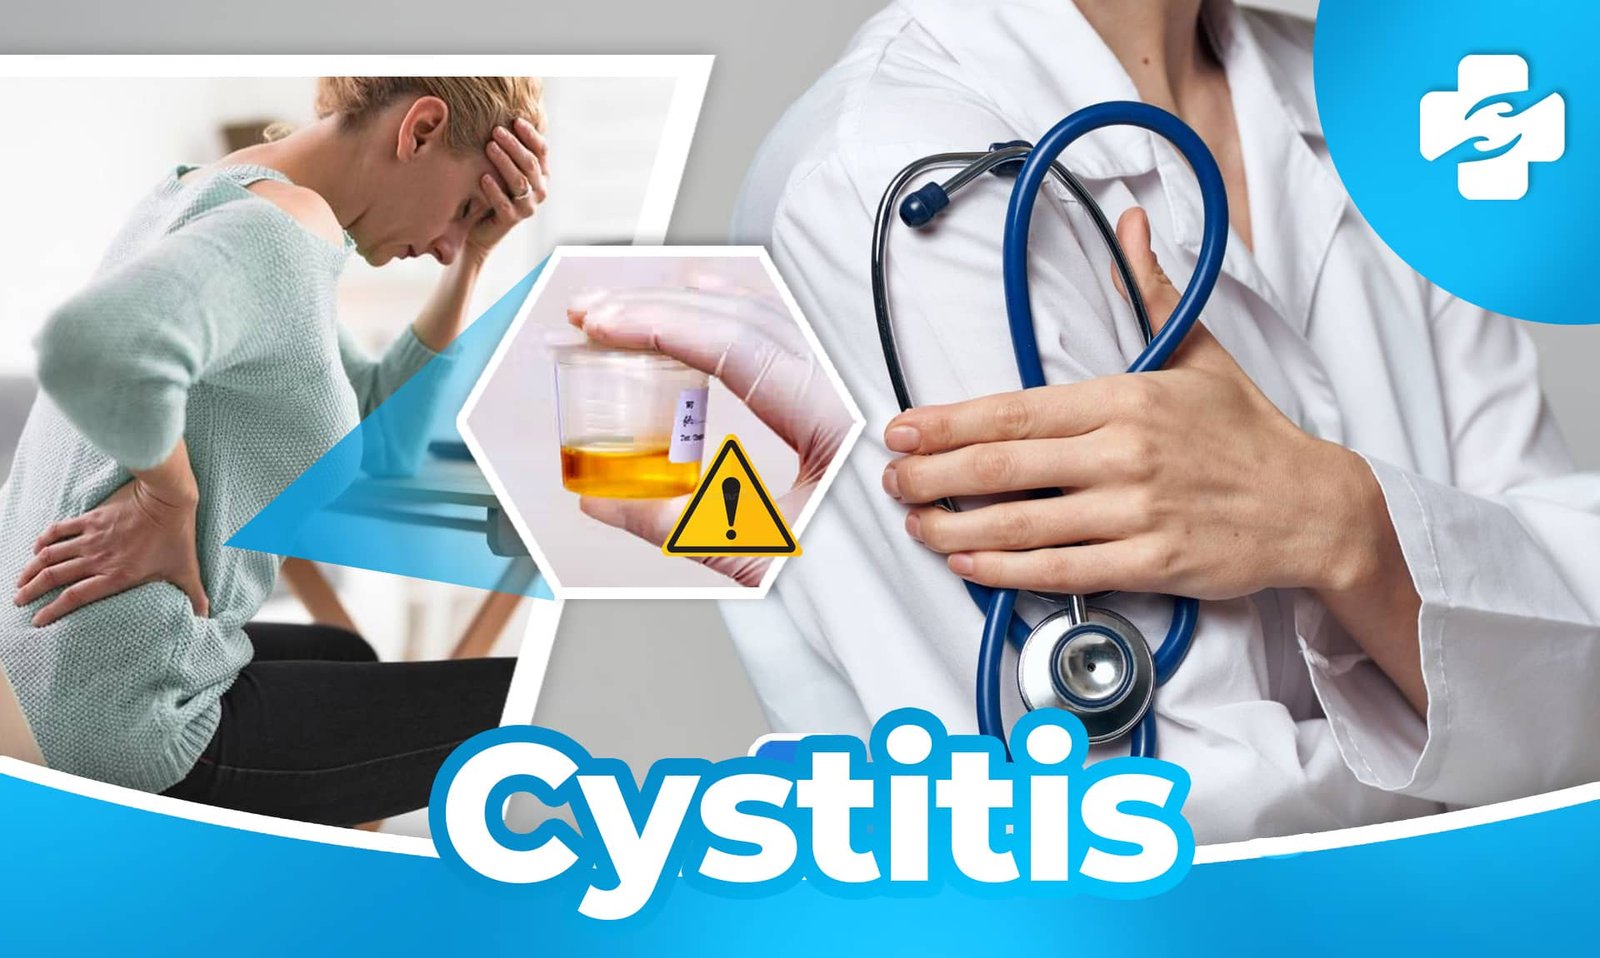 Pengobatan cystitis - Klinik Utama Sentosa